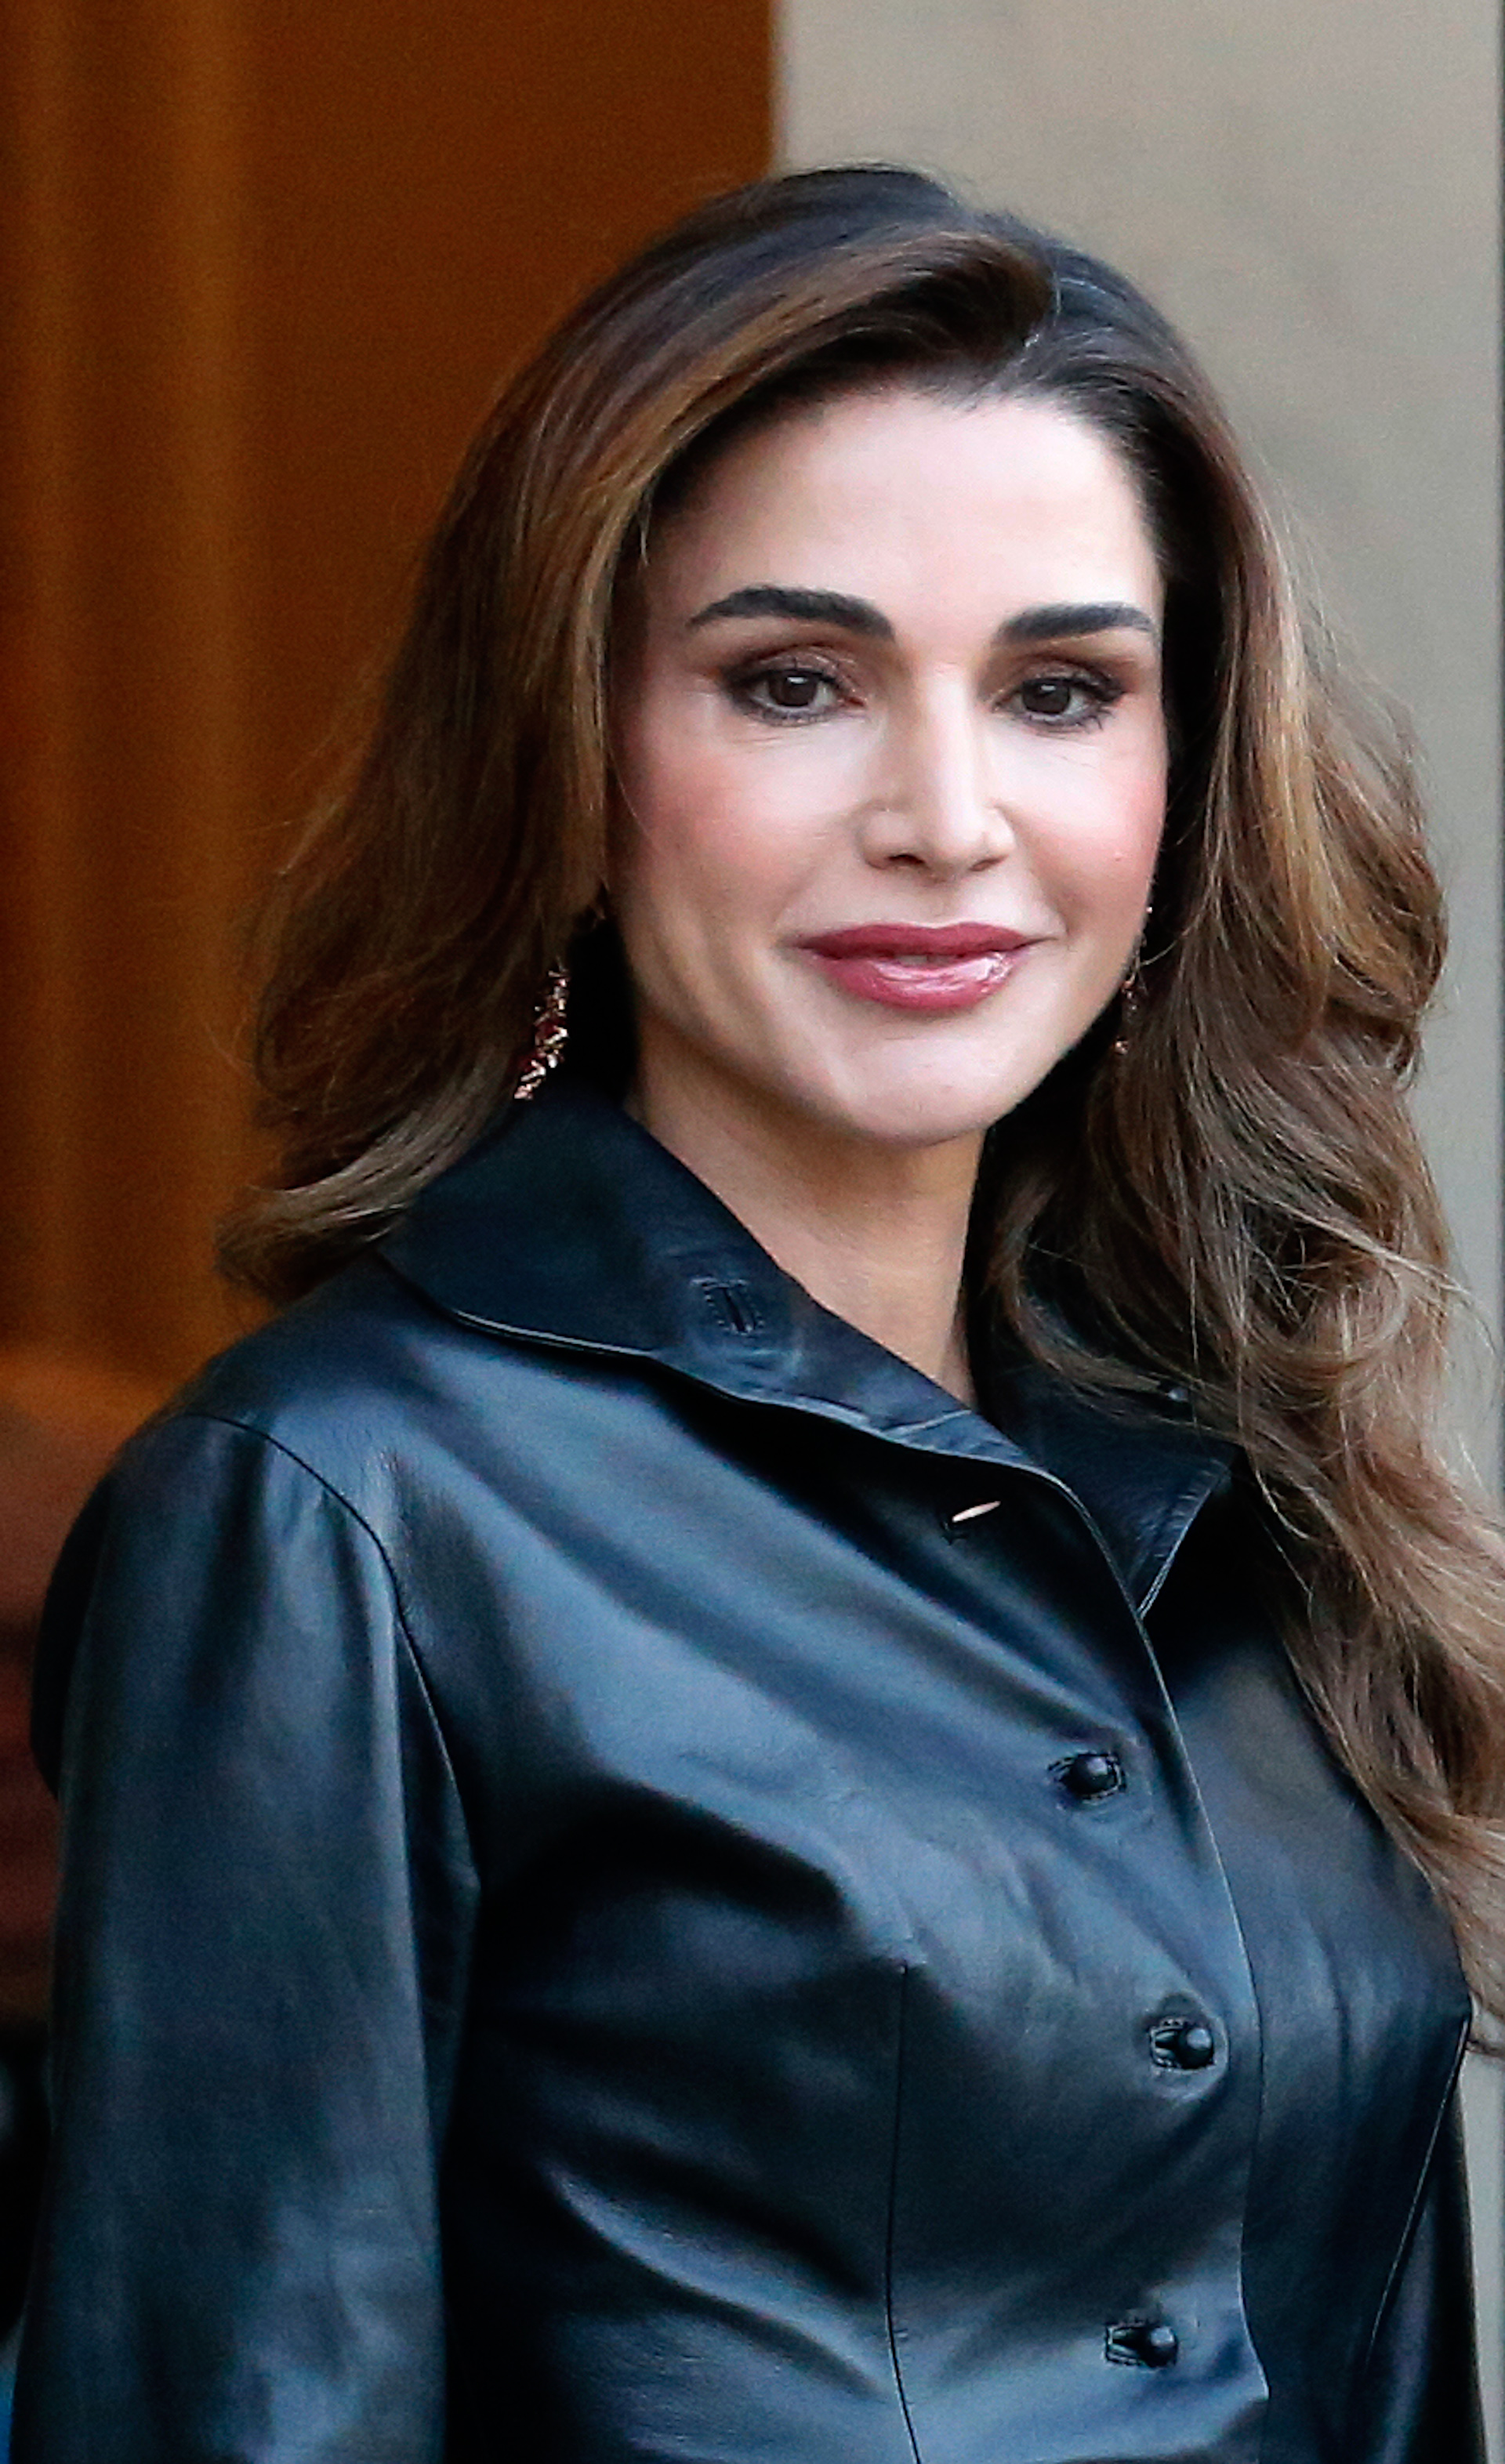 La Reina Rania, emocionada: 